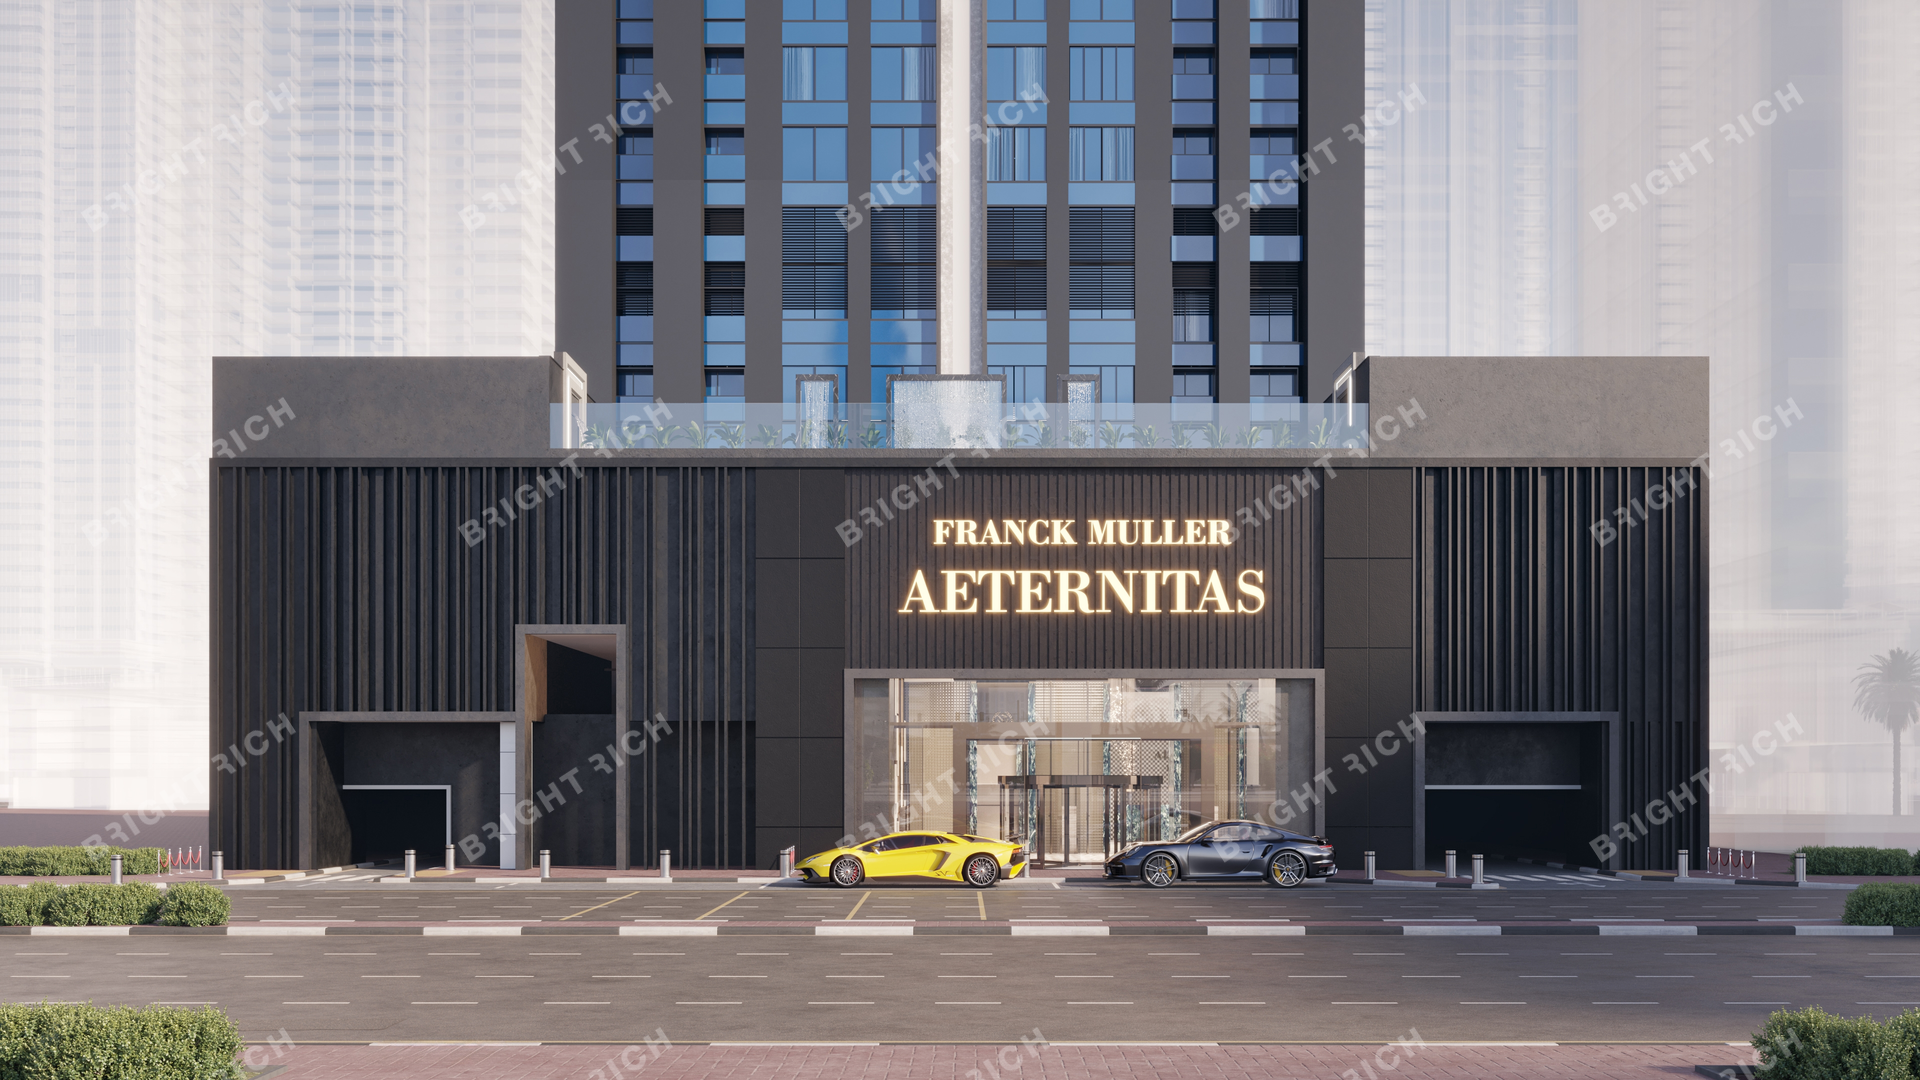 Aeternitas by Franck Muller, apart complex in Dubai - 8